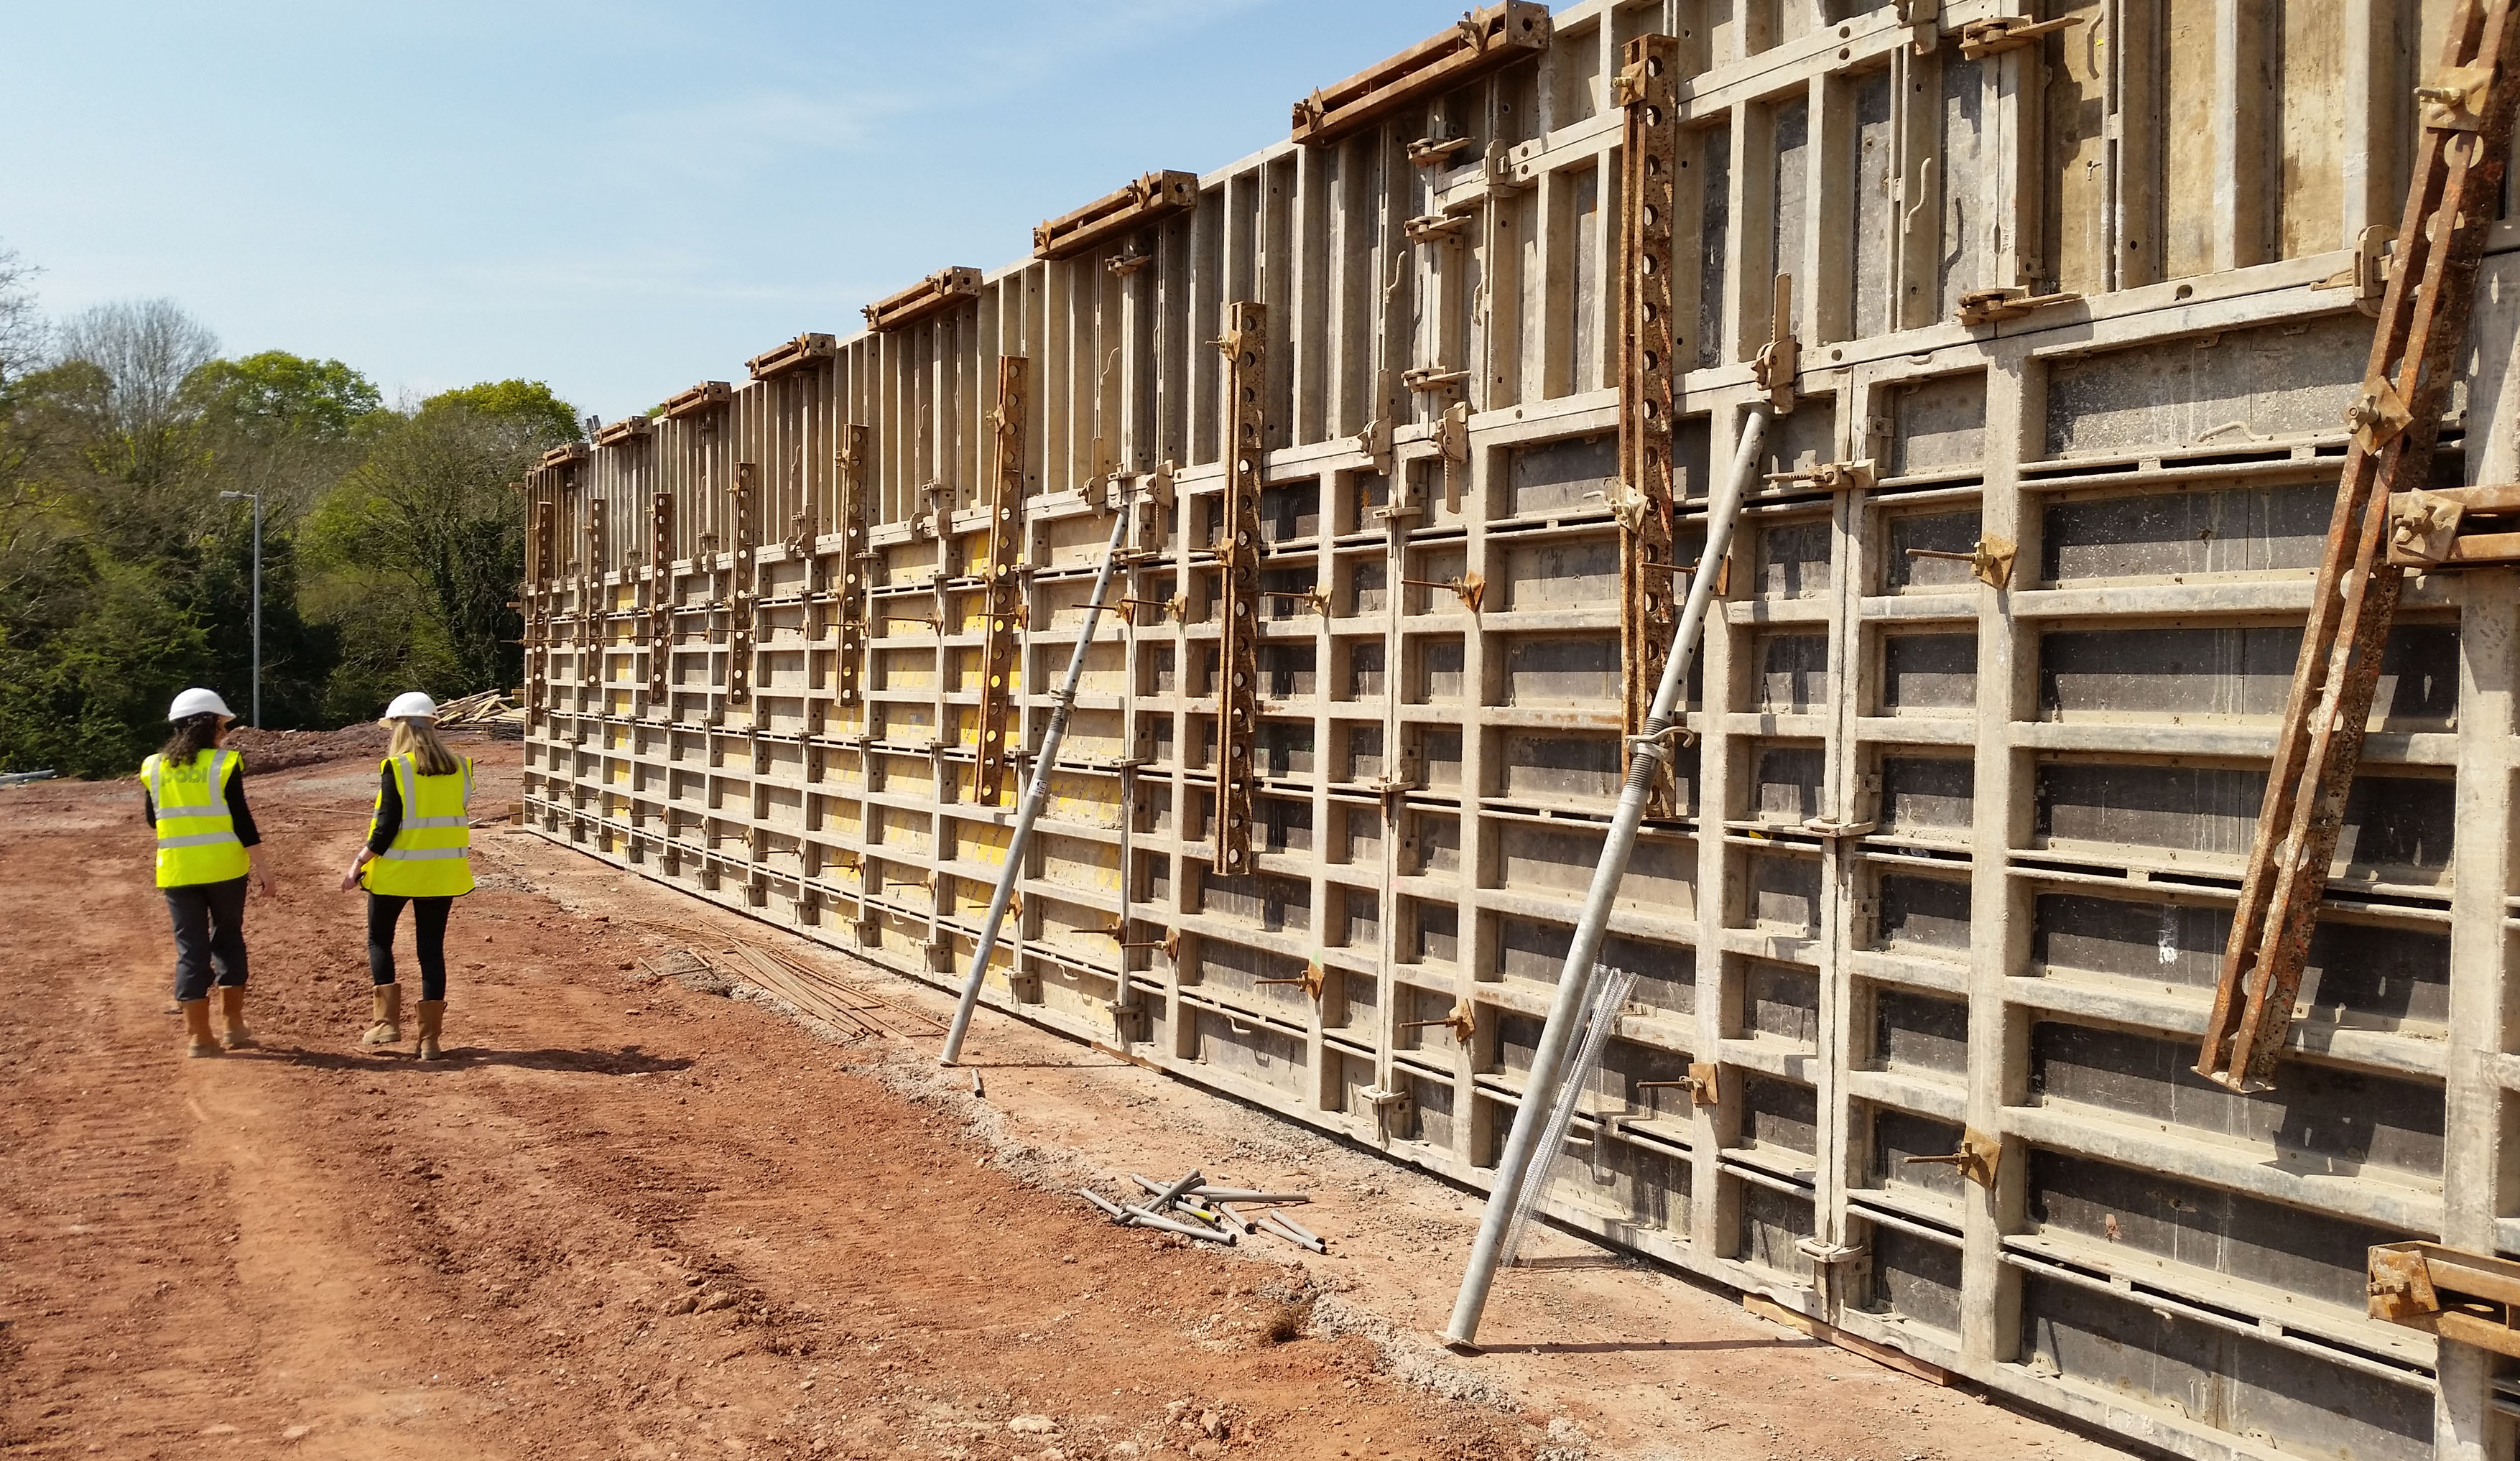 Retaining wall under construction